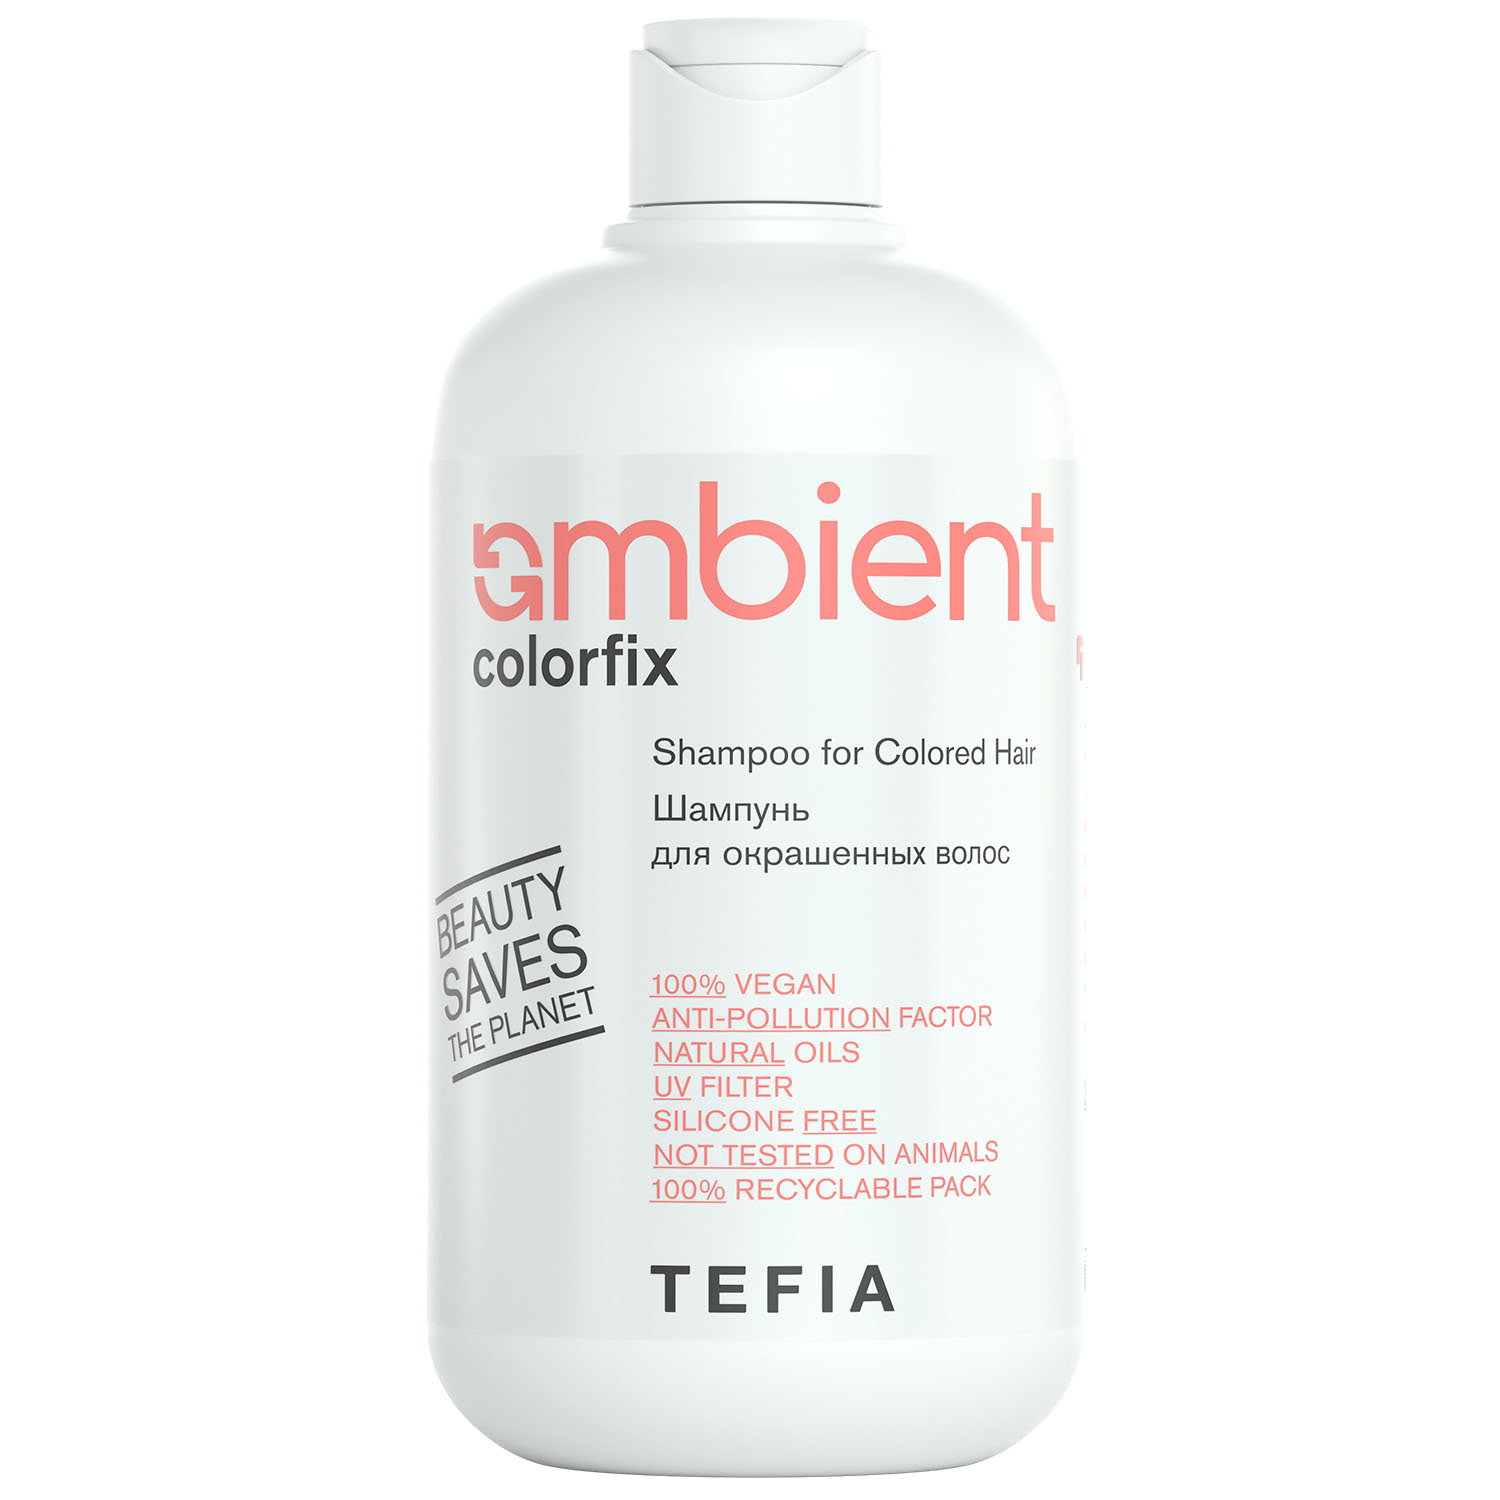 Tefia Шампунь для окрашенных волос Shampoo for Colored Hair, 250 мл (Tefia, Ambient) tefia шампунь для окрашенных волос shampoo for colored hair 250 мл tefia ambient